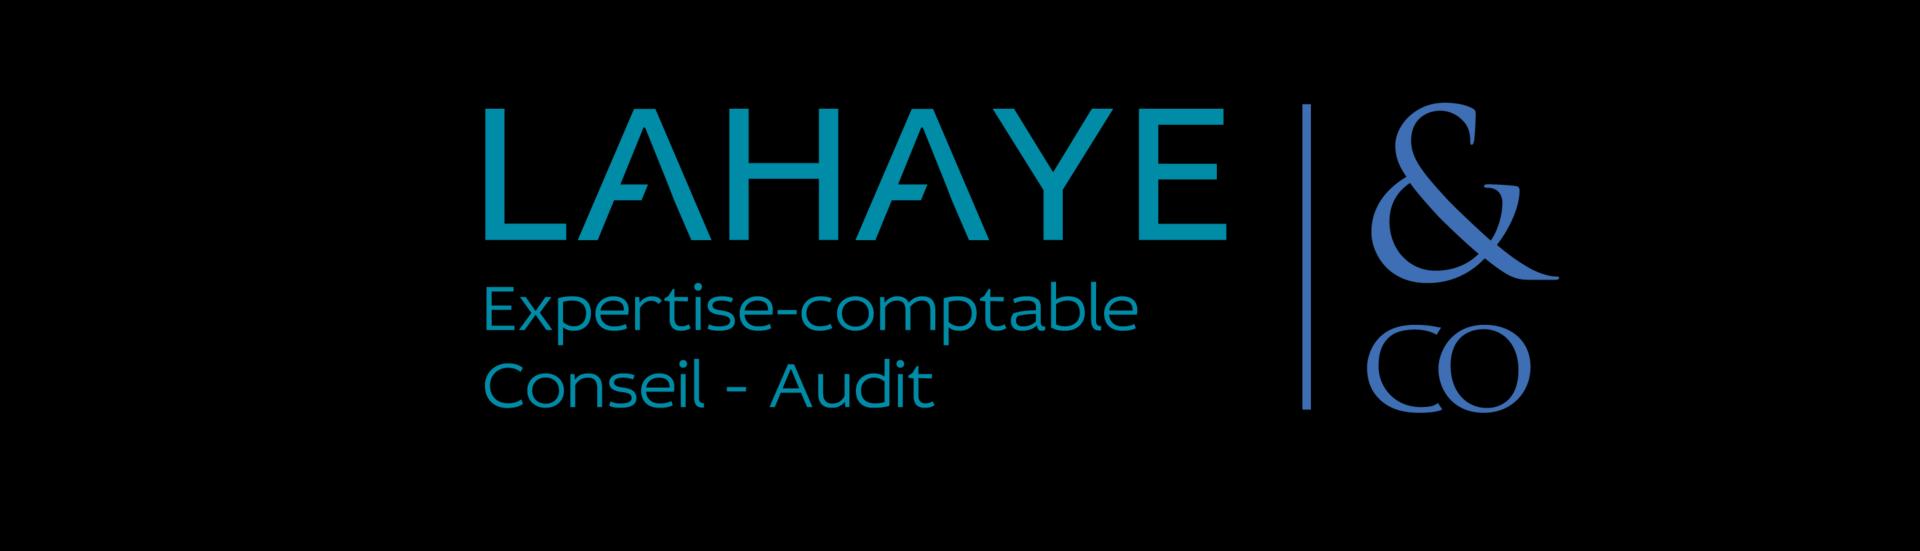 Lahaye & Co Saint Etienne